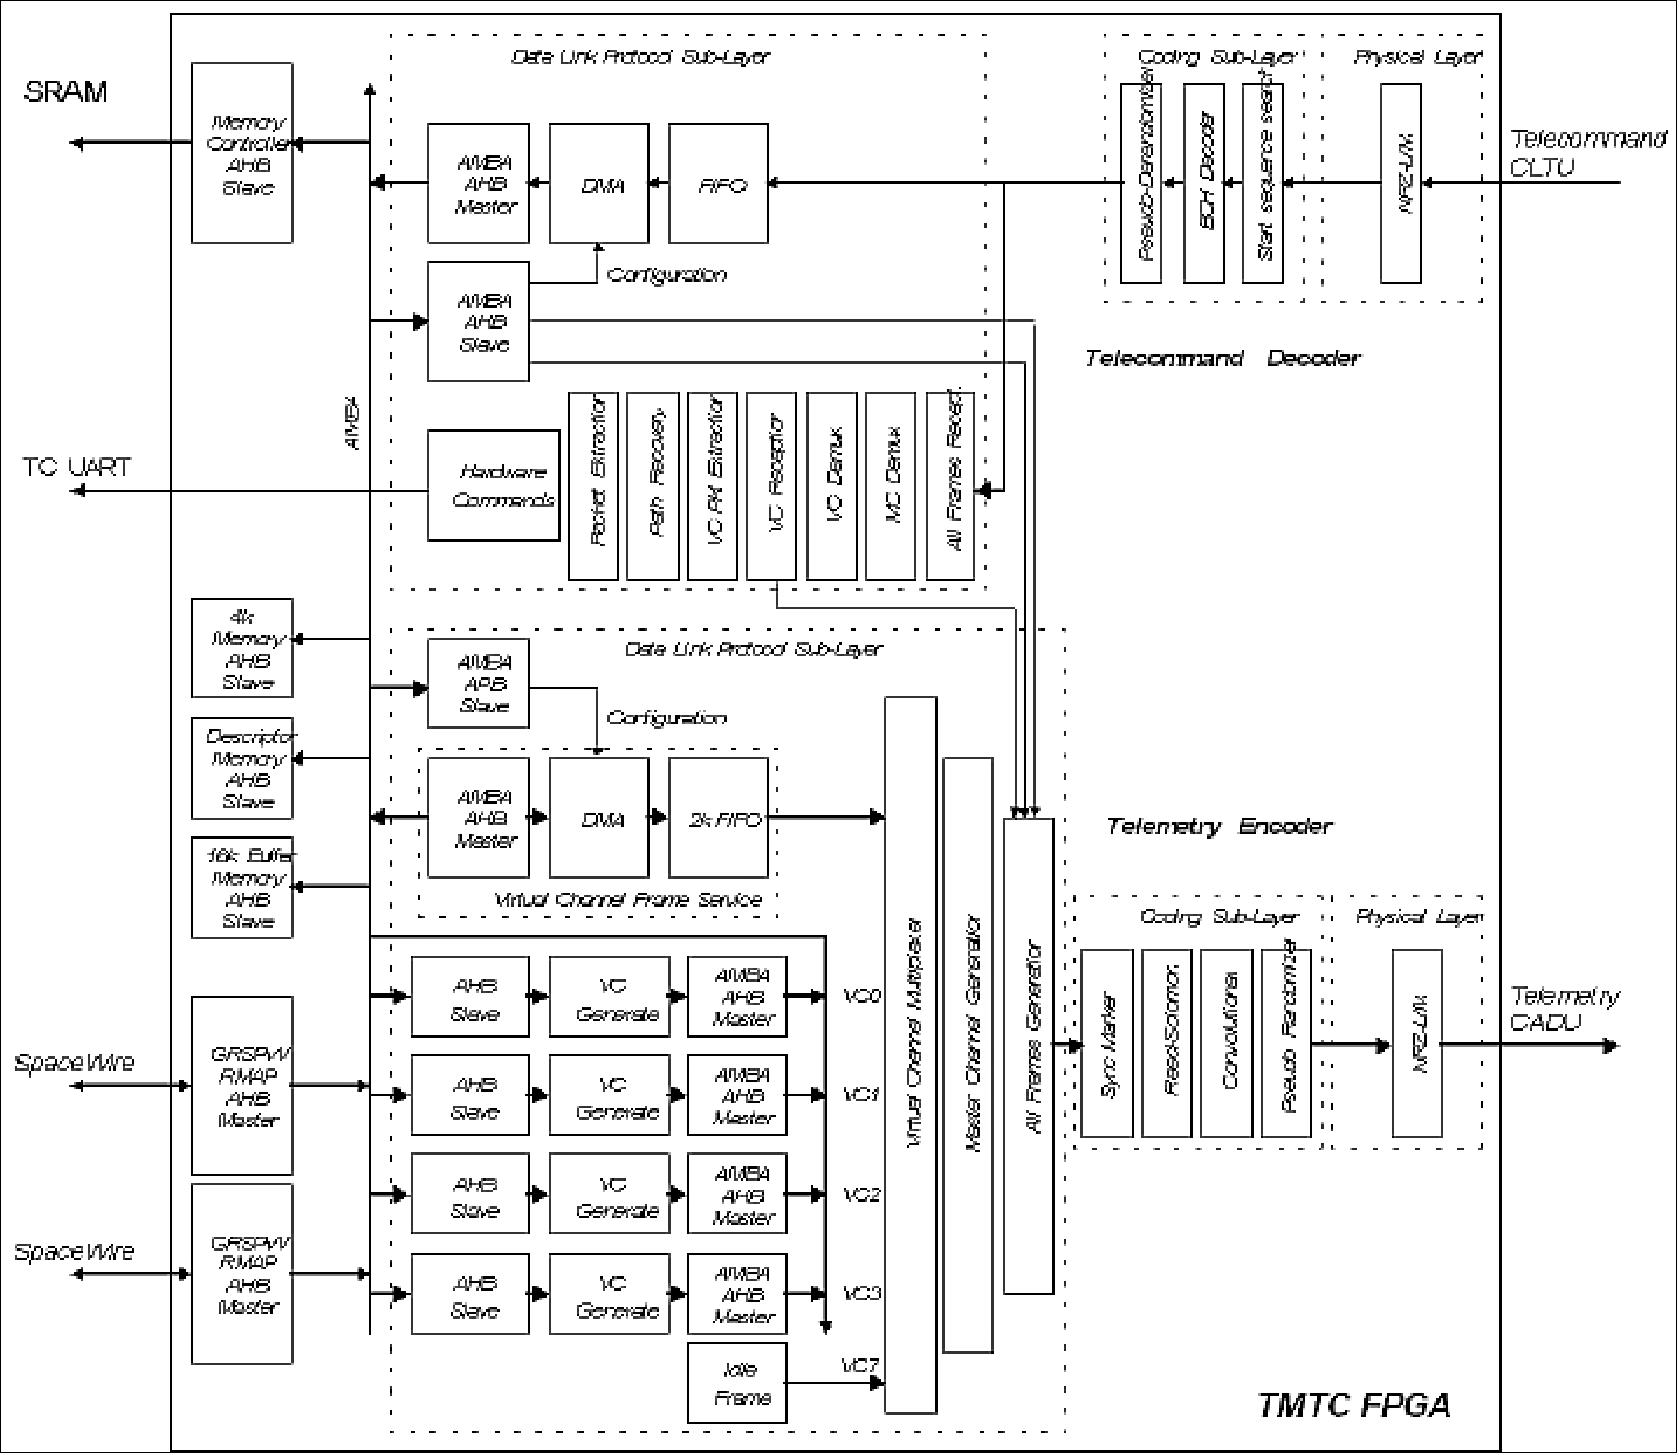 Figure 16: Block diagram of TM/TC FPGA device (image credit: IRS Stuttgart)